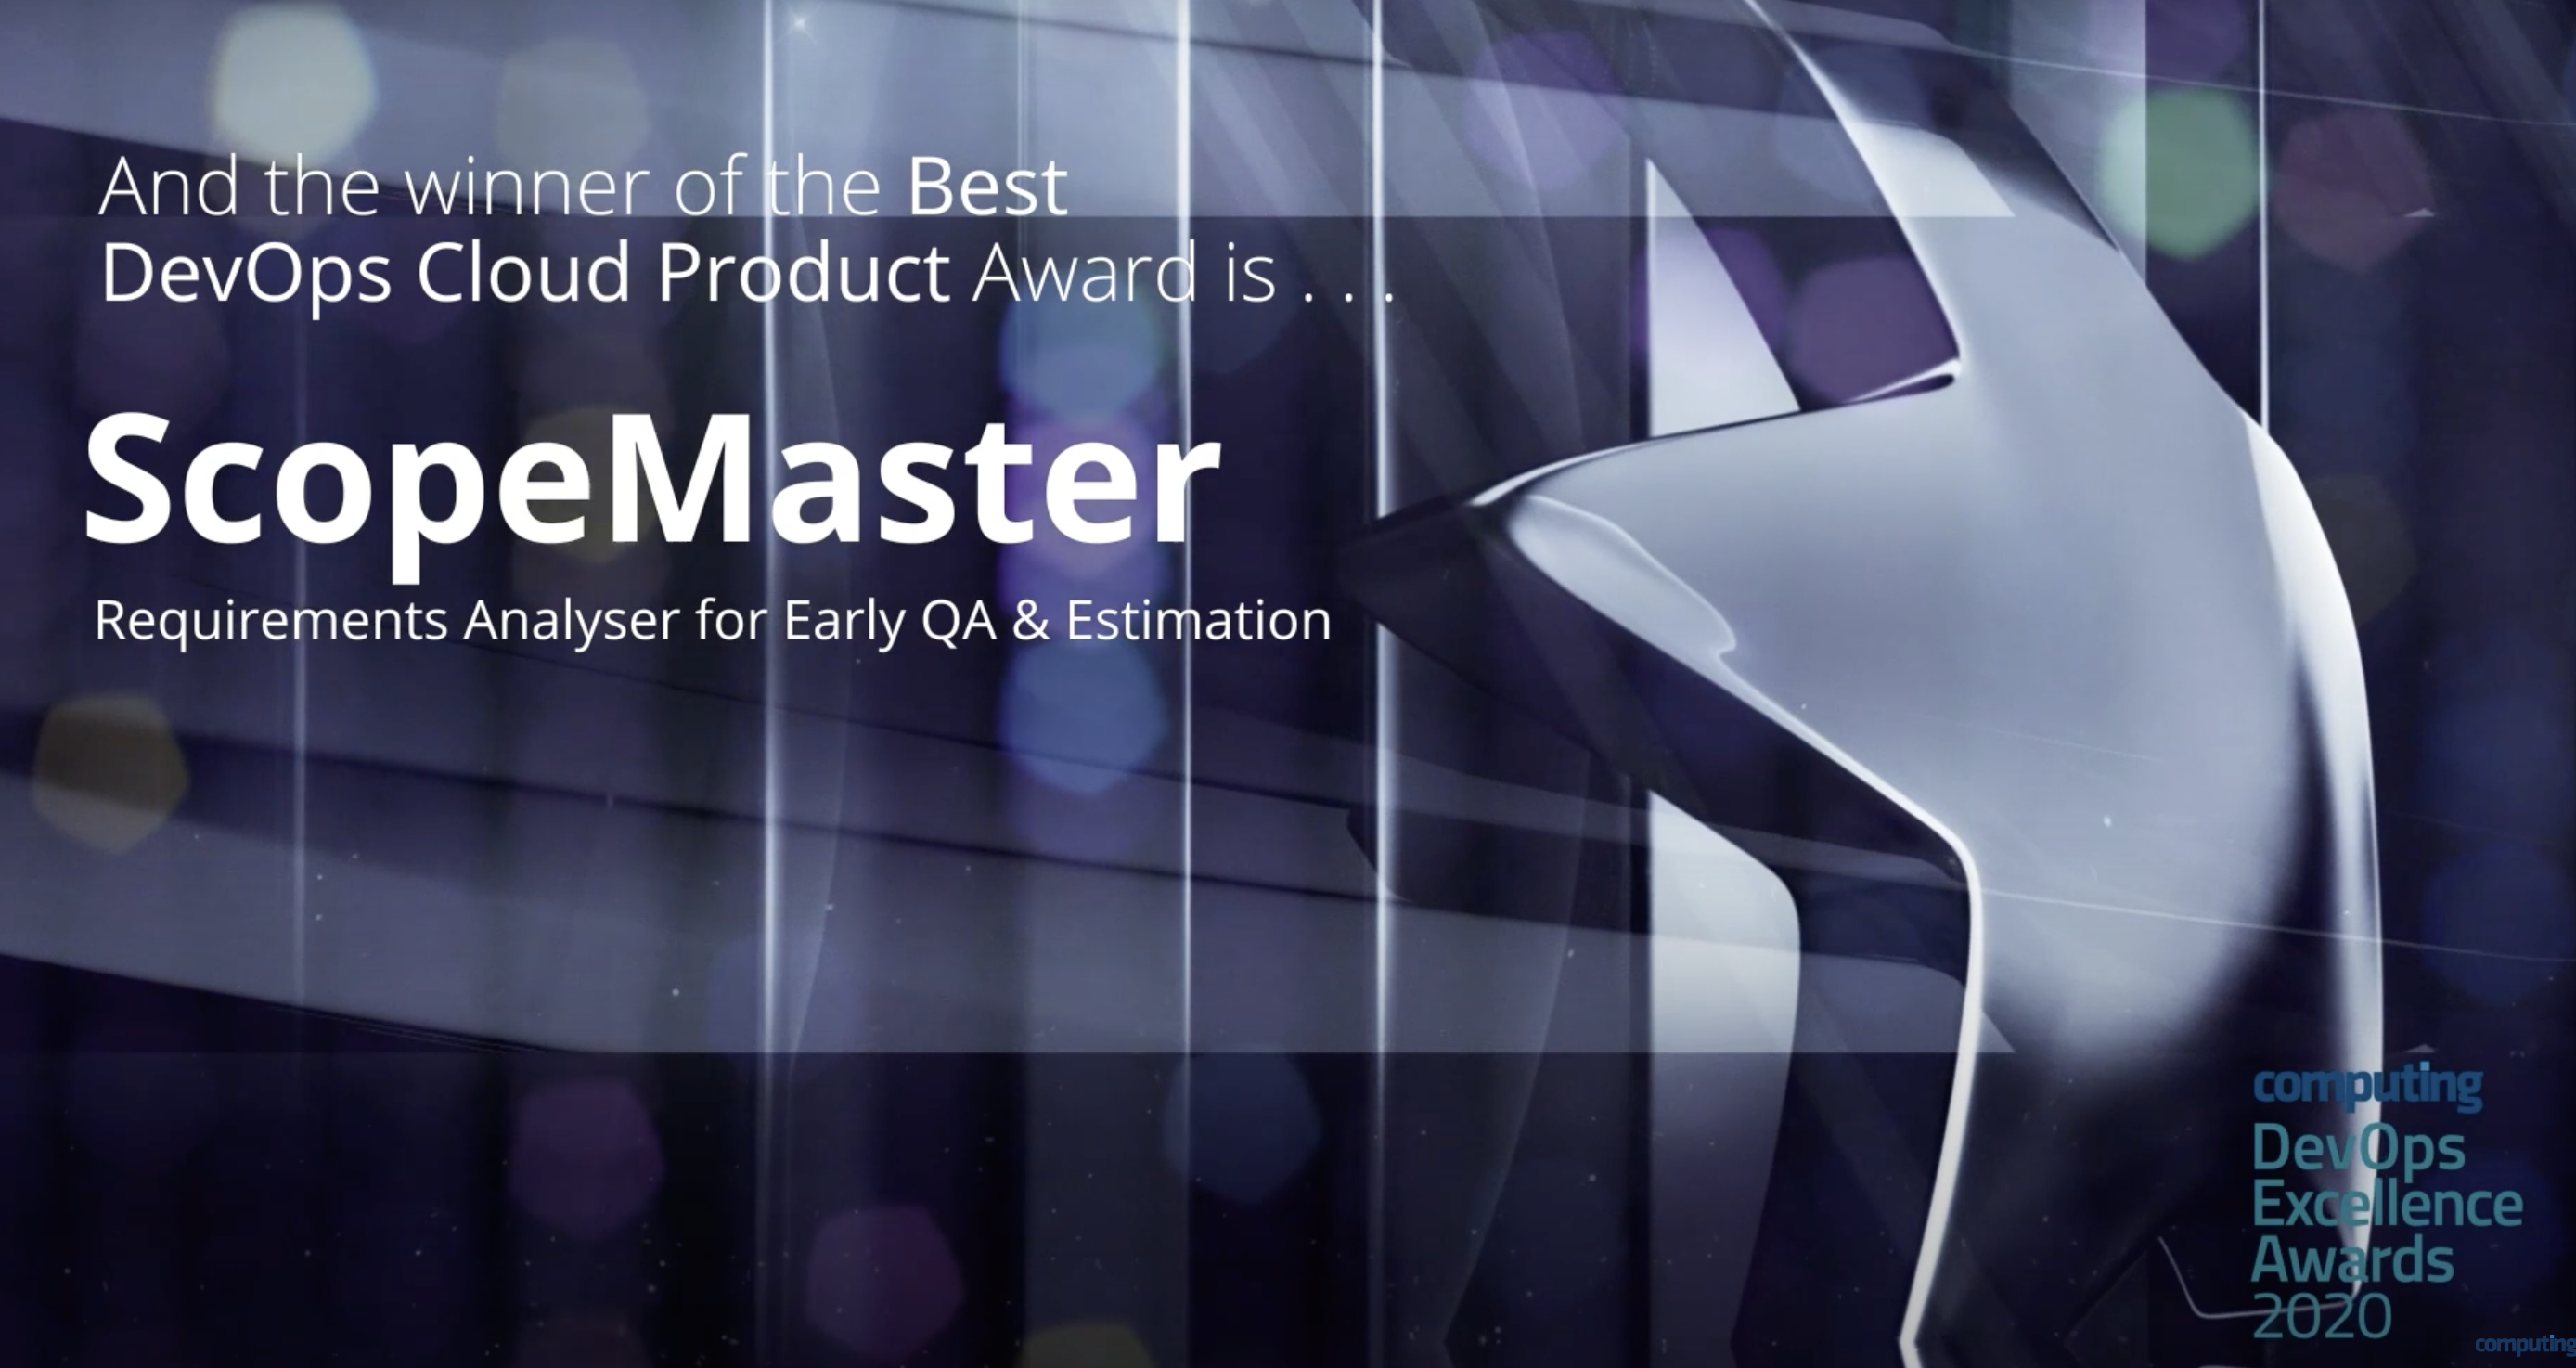 ScopeMaster wins DevOps Computing Award for best DevOps cloud product